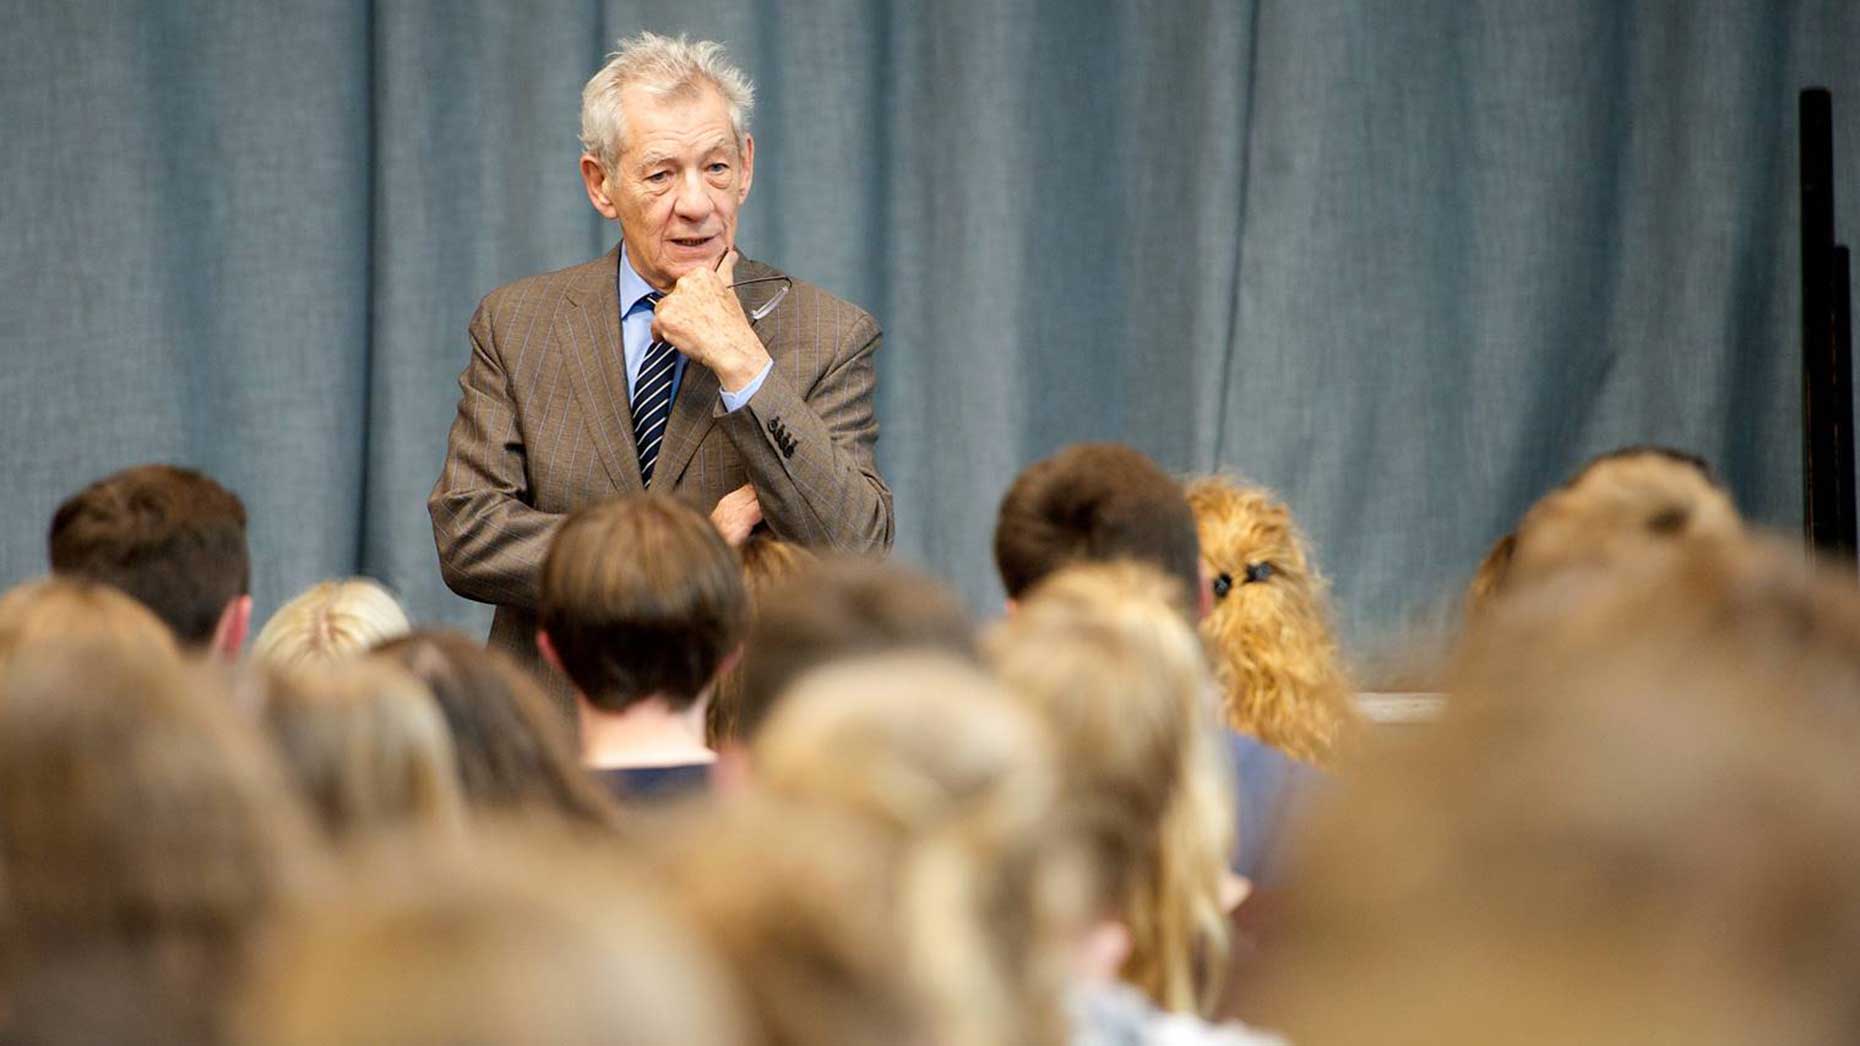 Sir Ian McKellen at William Farr School in Welton